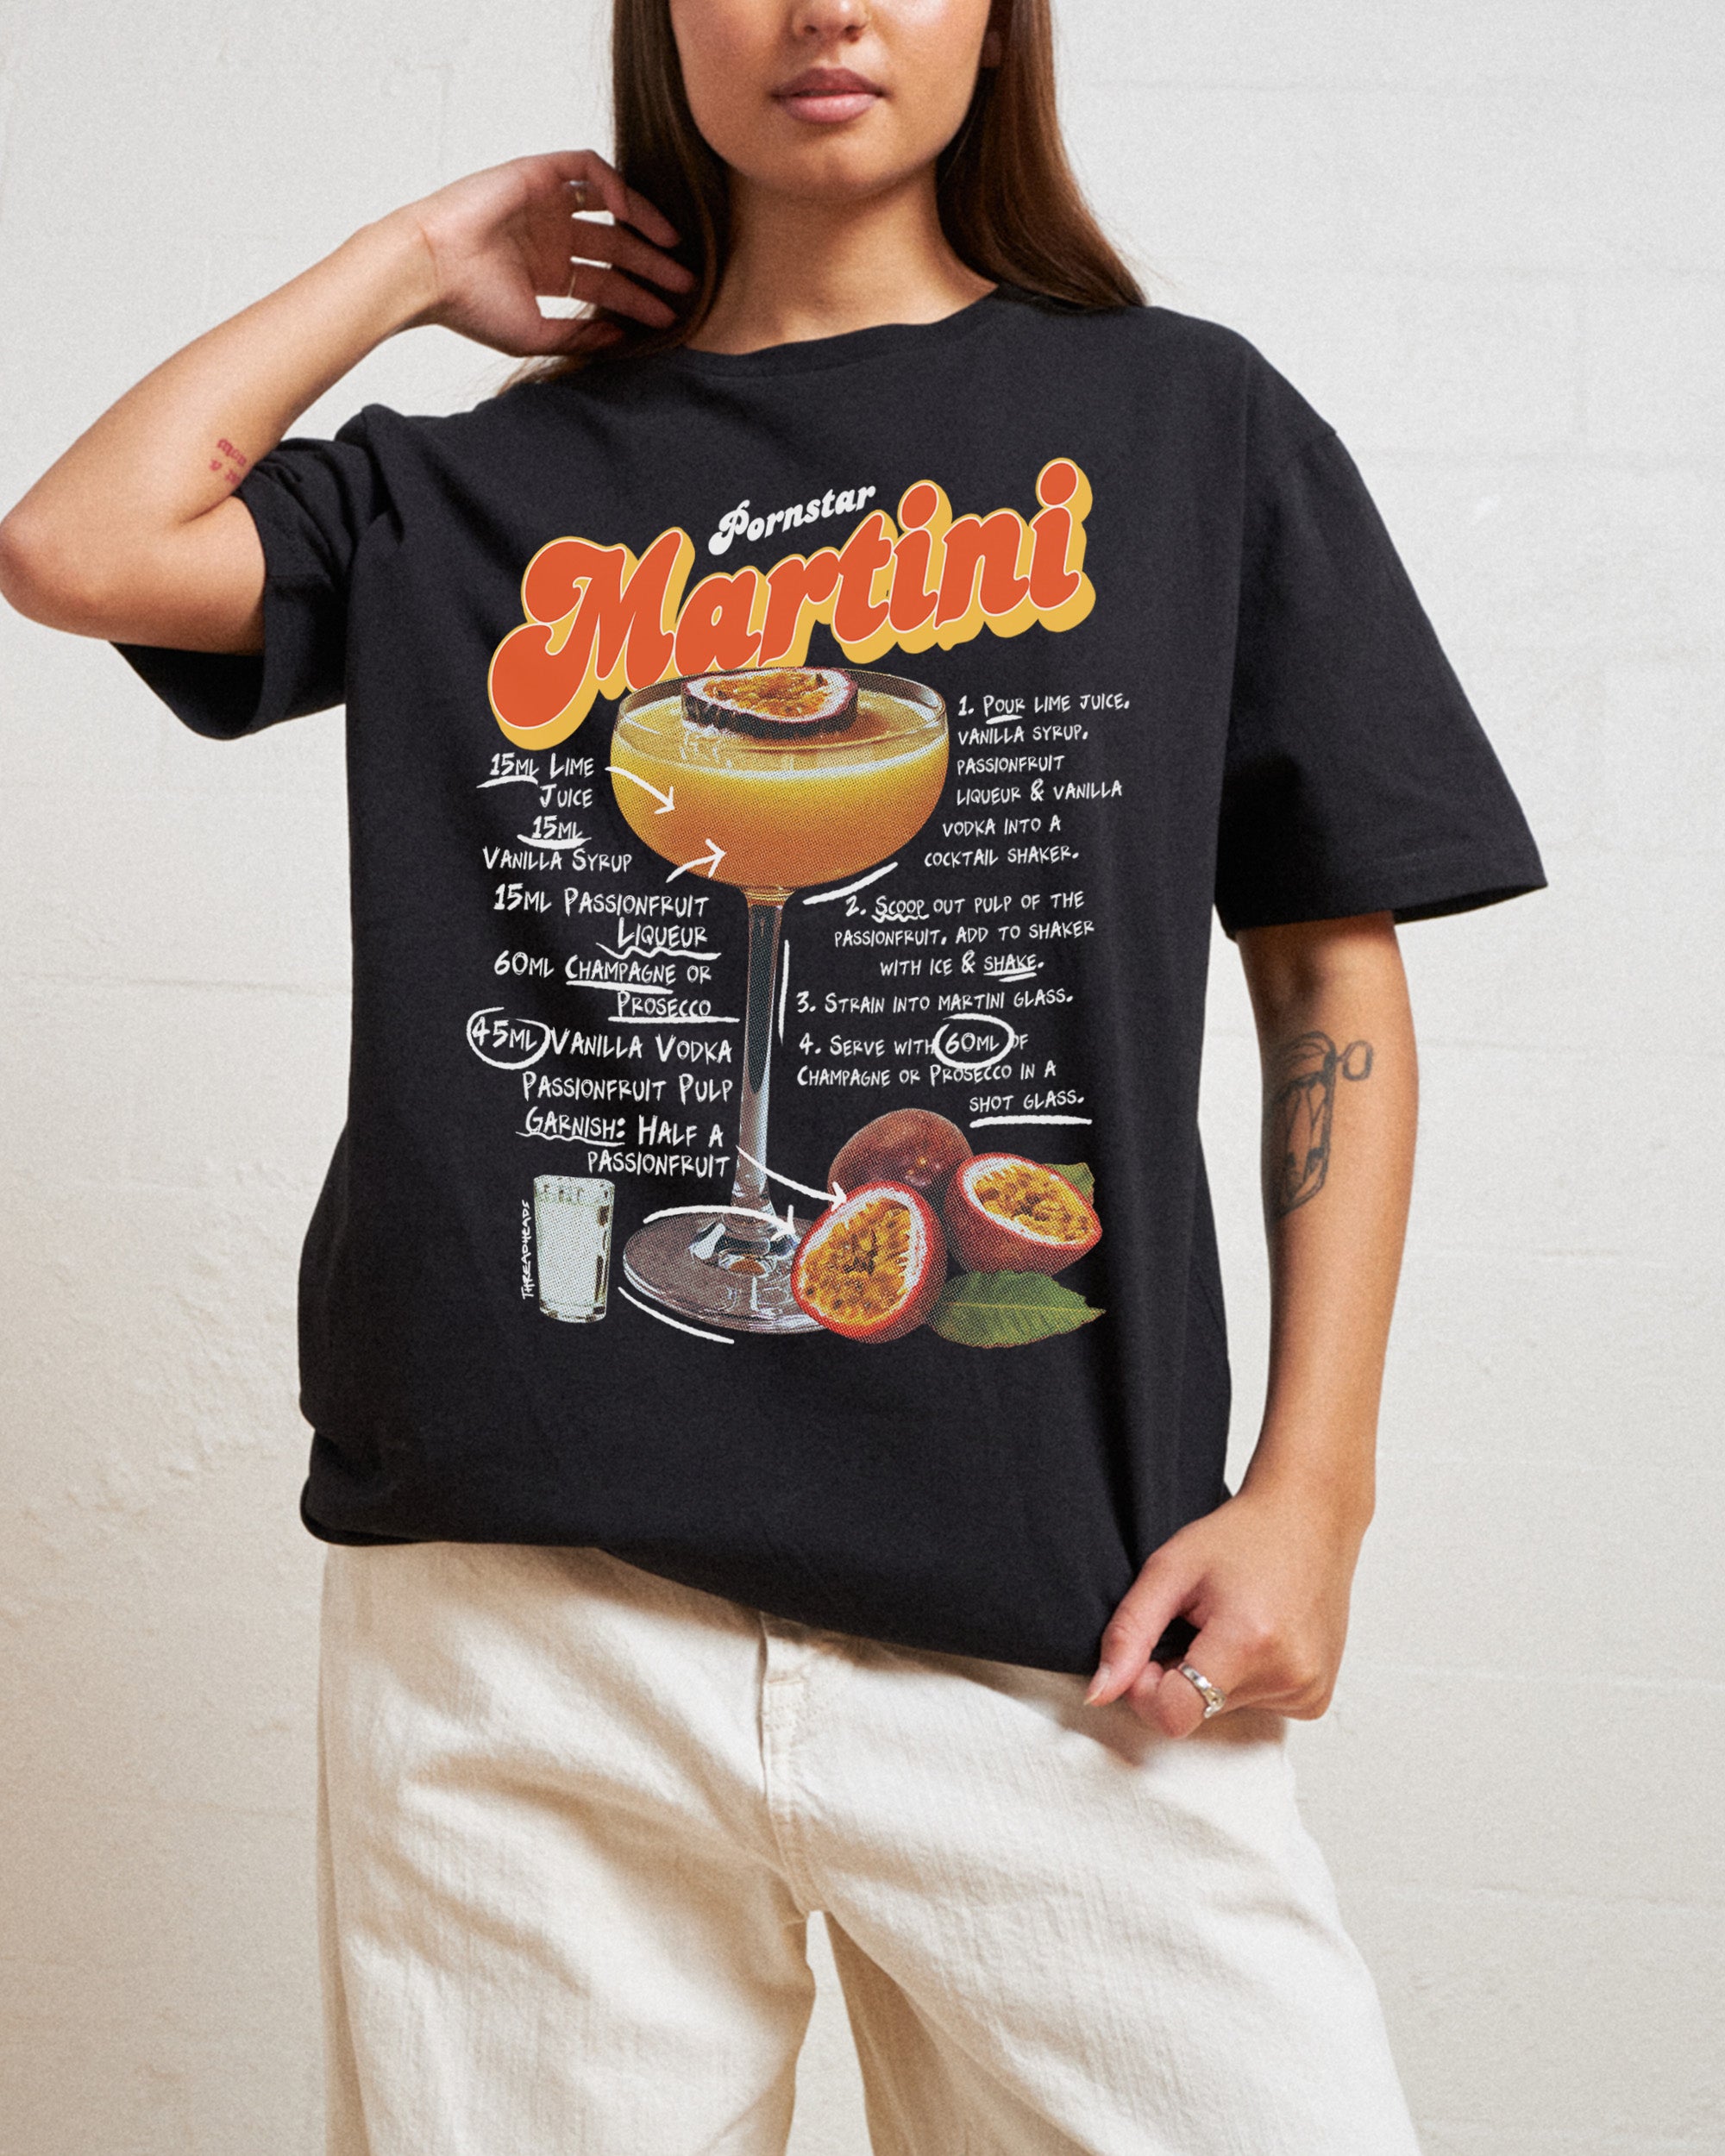 Pornstar Martini T-Shirt